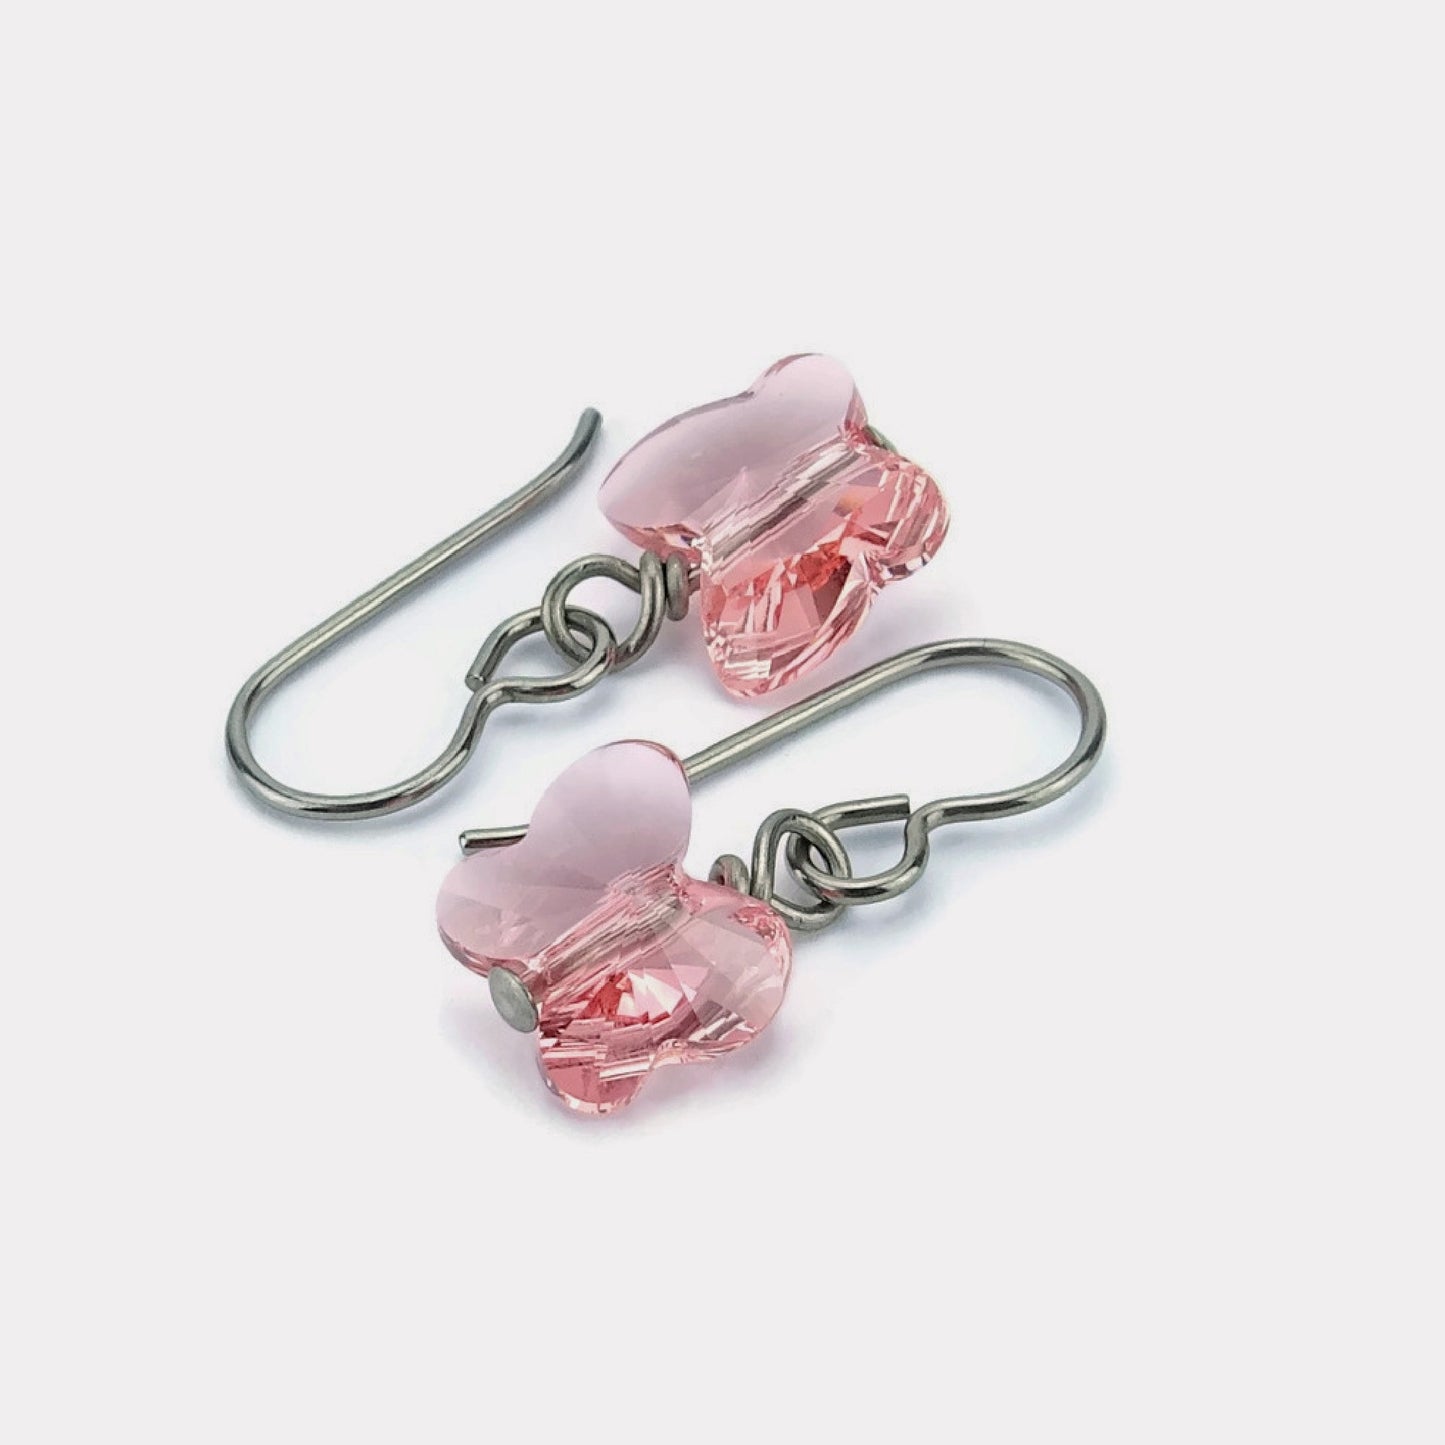 Titanium Earrings Peach Butterfly Crystal, Rose Peach Swarovski Crystal Butterfly Sensitive Ears Earrings for Girls, Rose Niobium Earrings